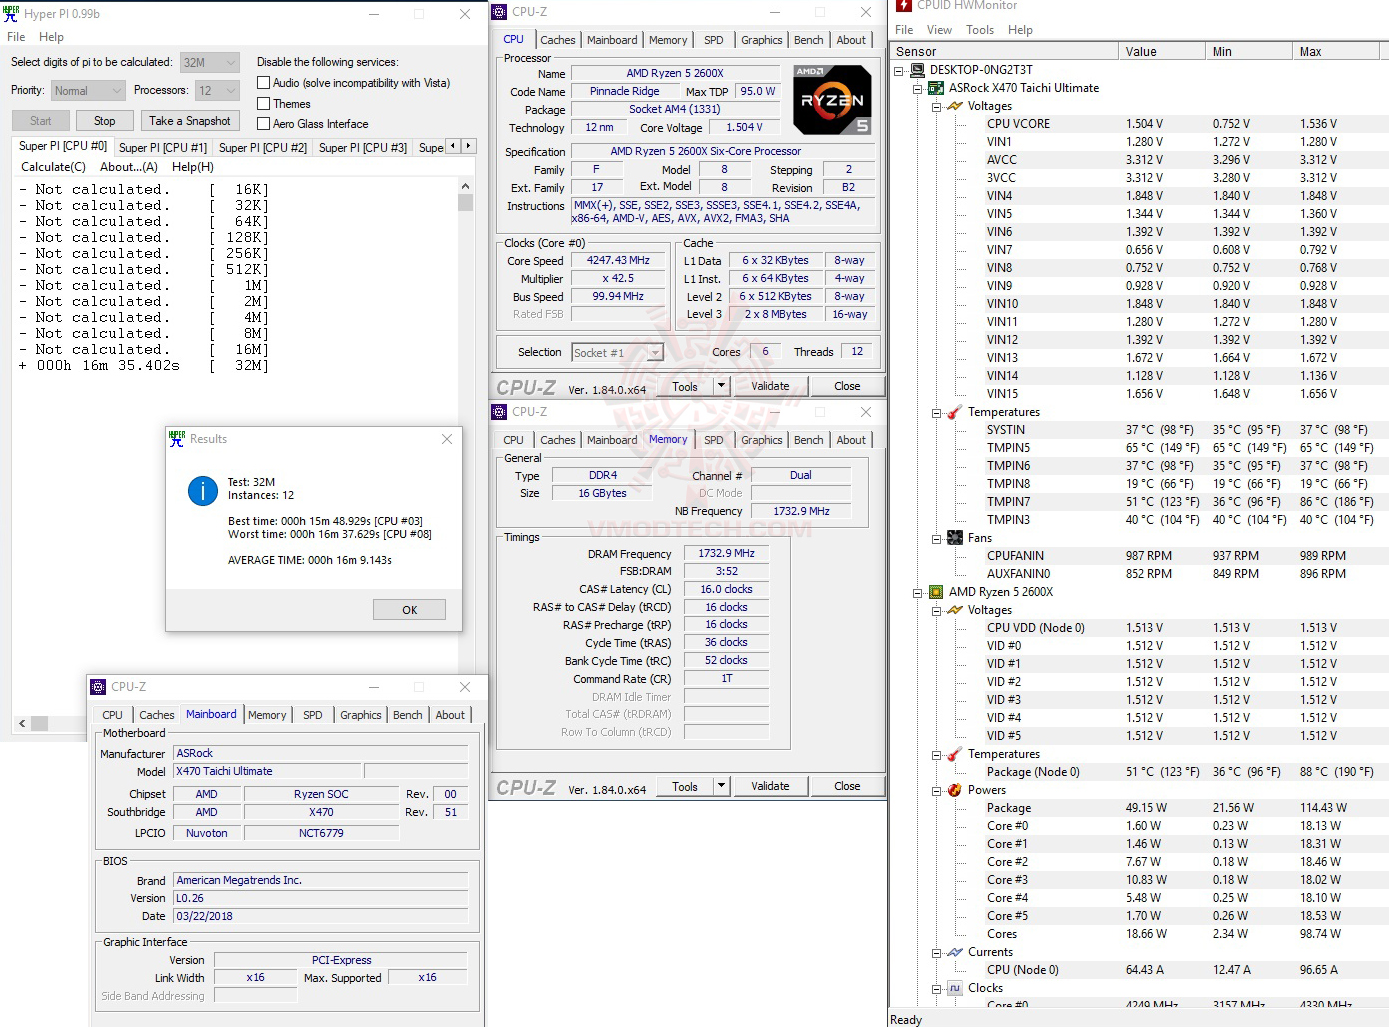 h32 2 oc AMD RYZEN 5 2600X PROCESSOR REVIEW